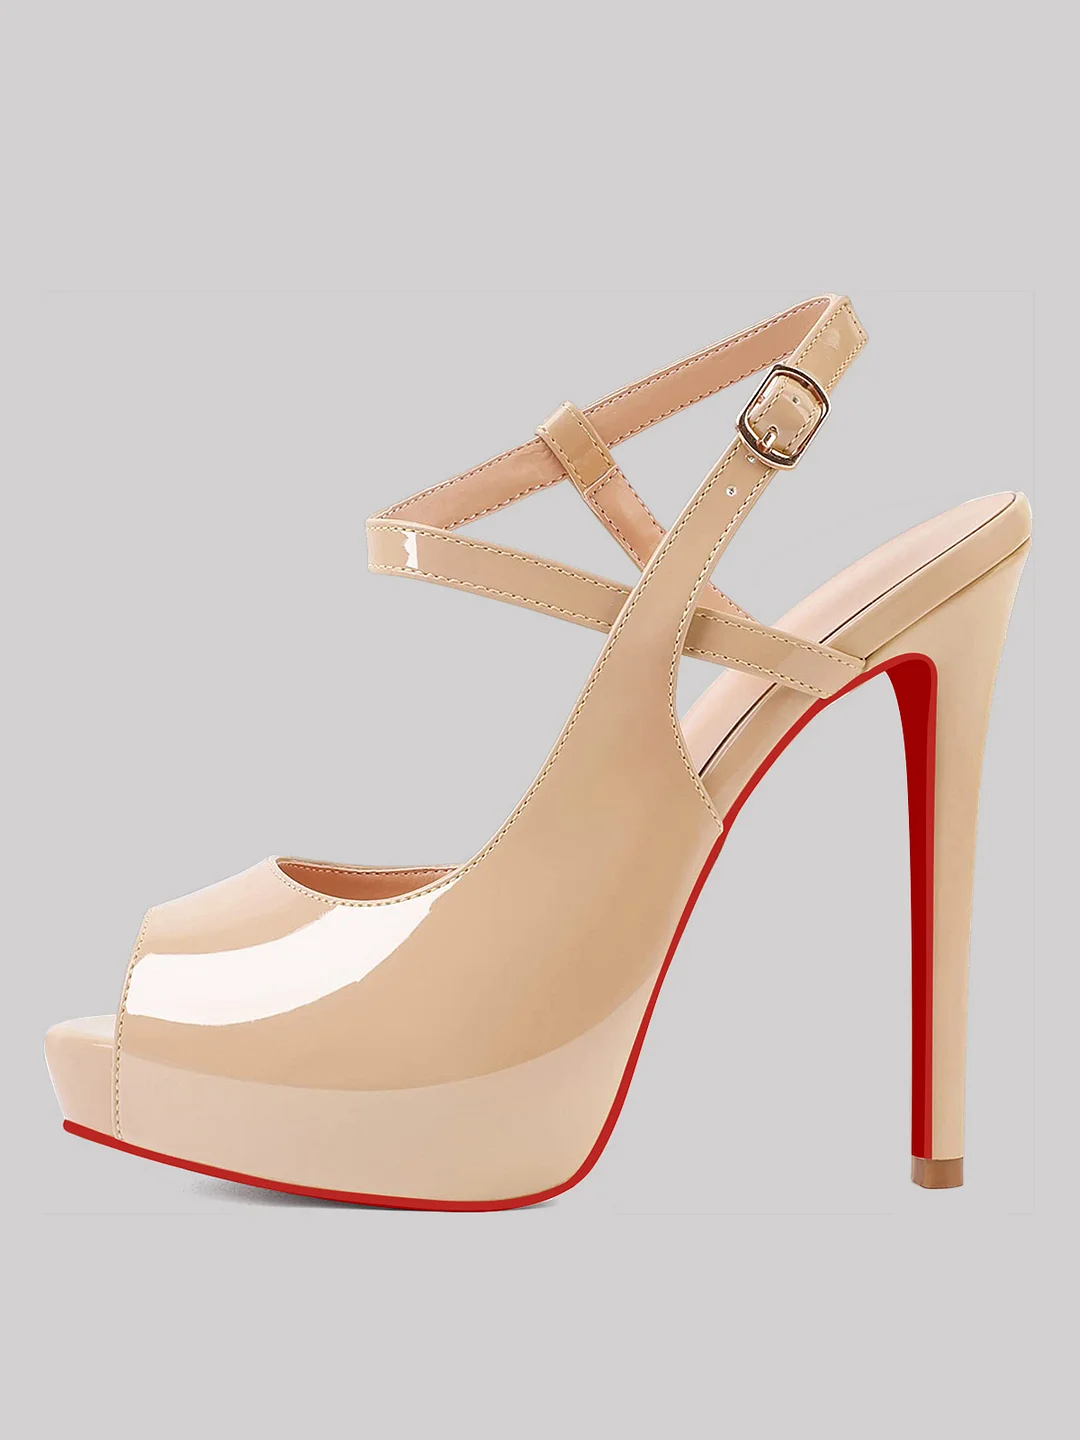 120mm Women's Stiletto High Heels Open Toe Sandals Red Bottom Platform So Jenlove Patent Shoes